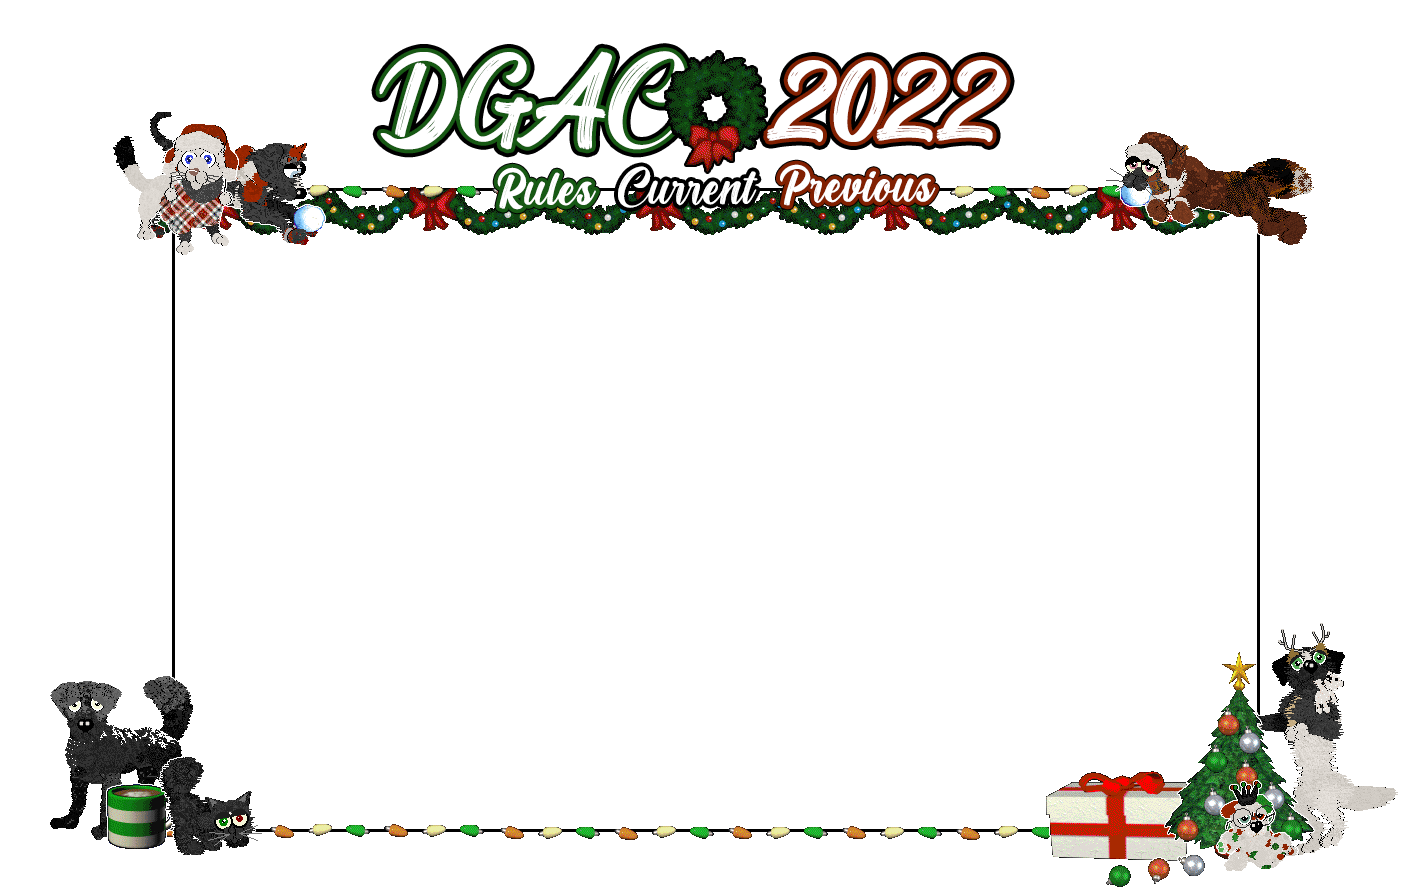 DGAC2022